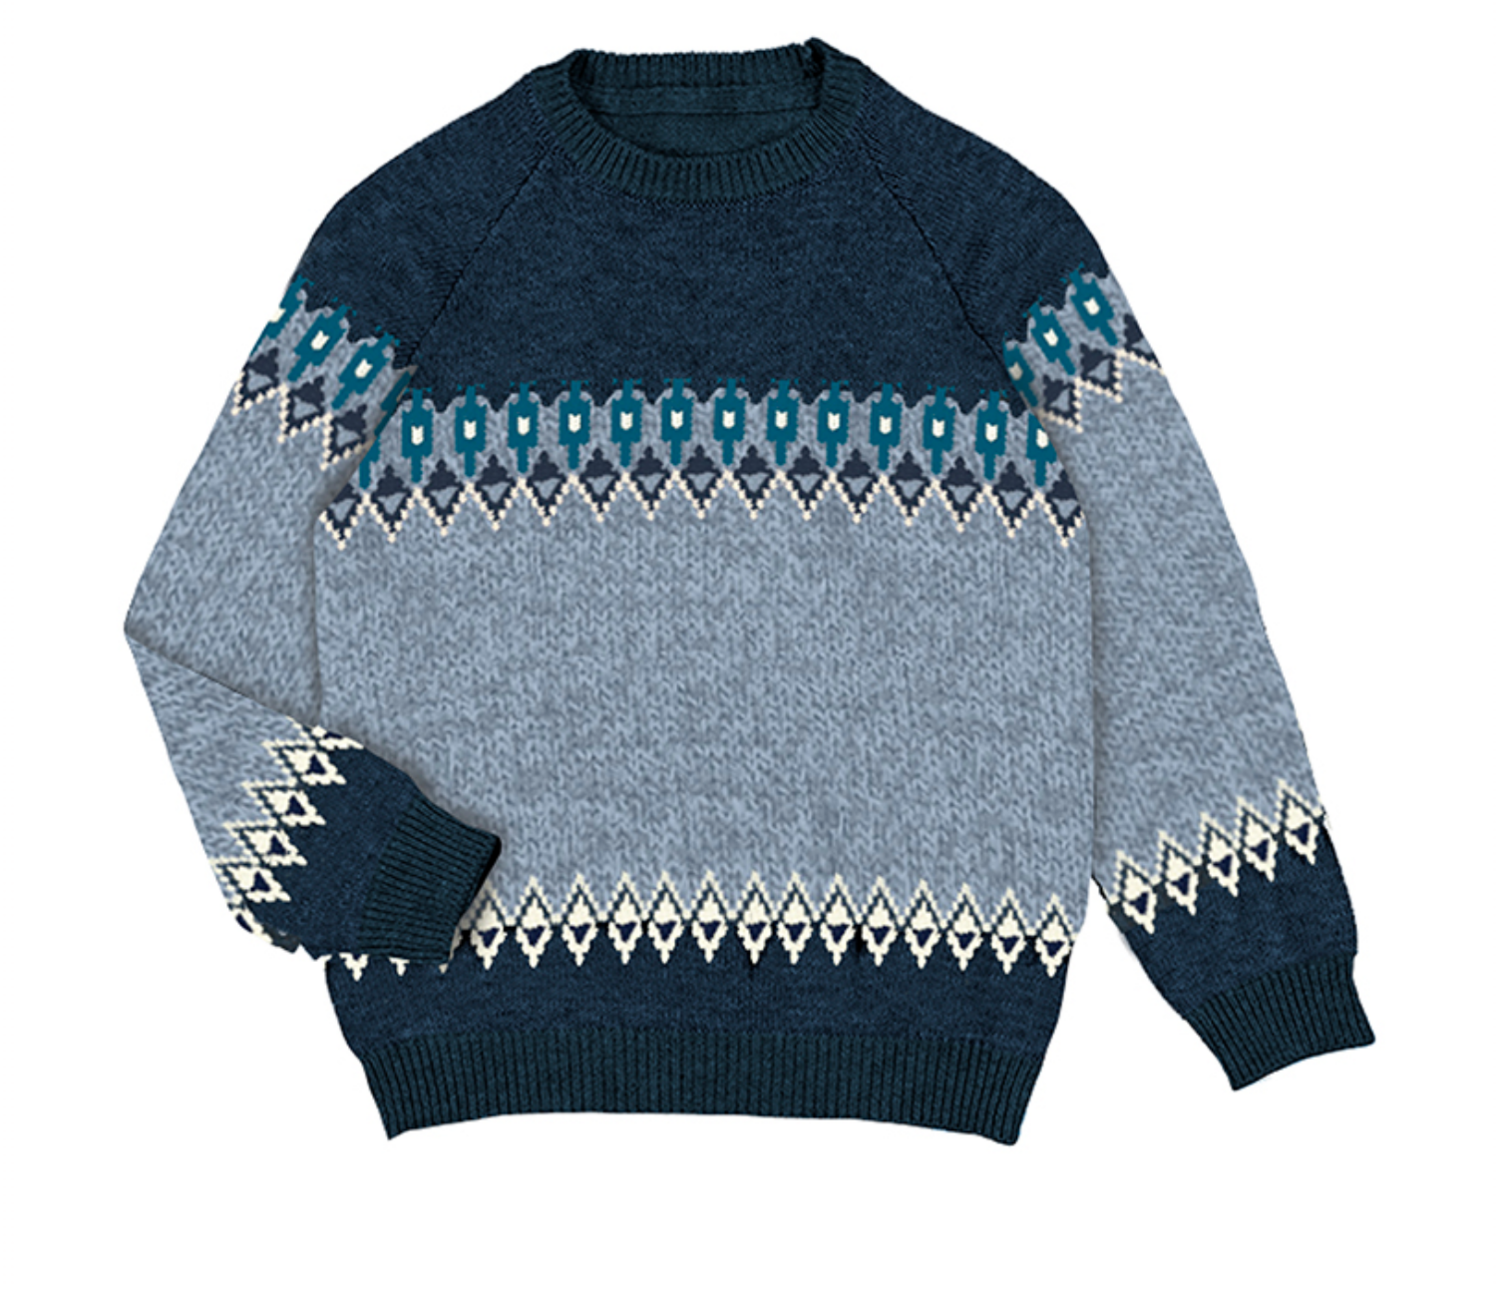 4321 wool blend jacquard sweater